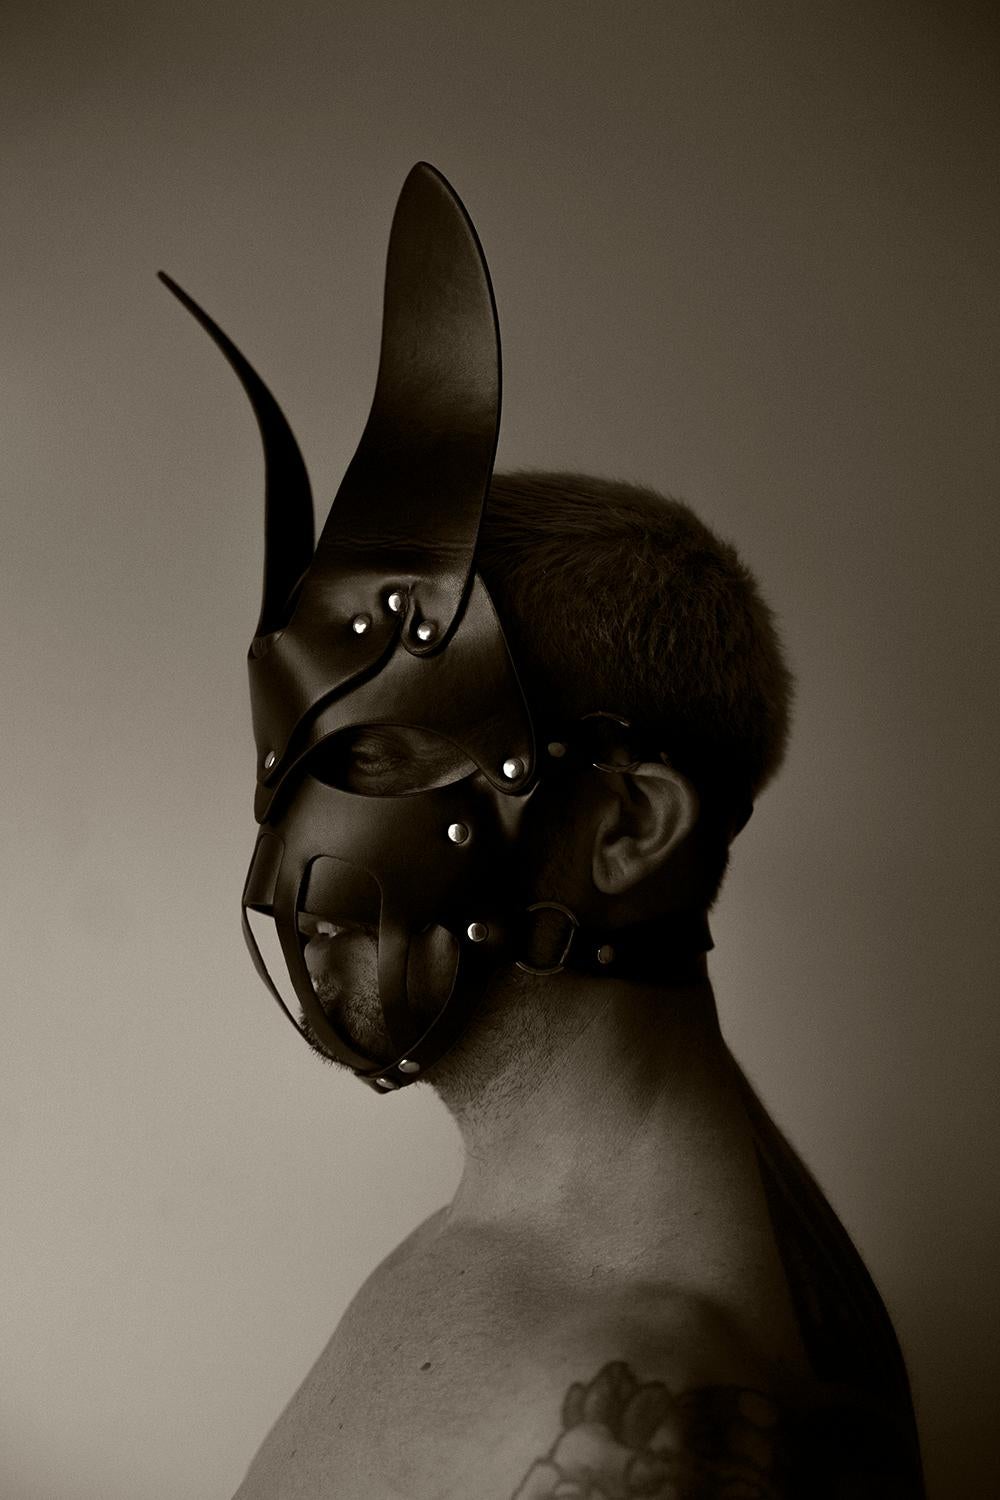 Ricky Cohete Figurative Photograph - Hombre en mascara. Limited Edition Photograph